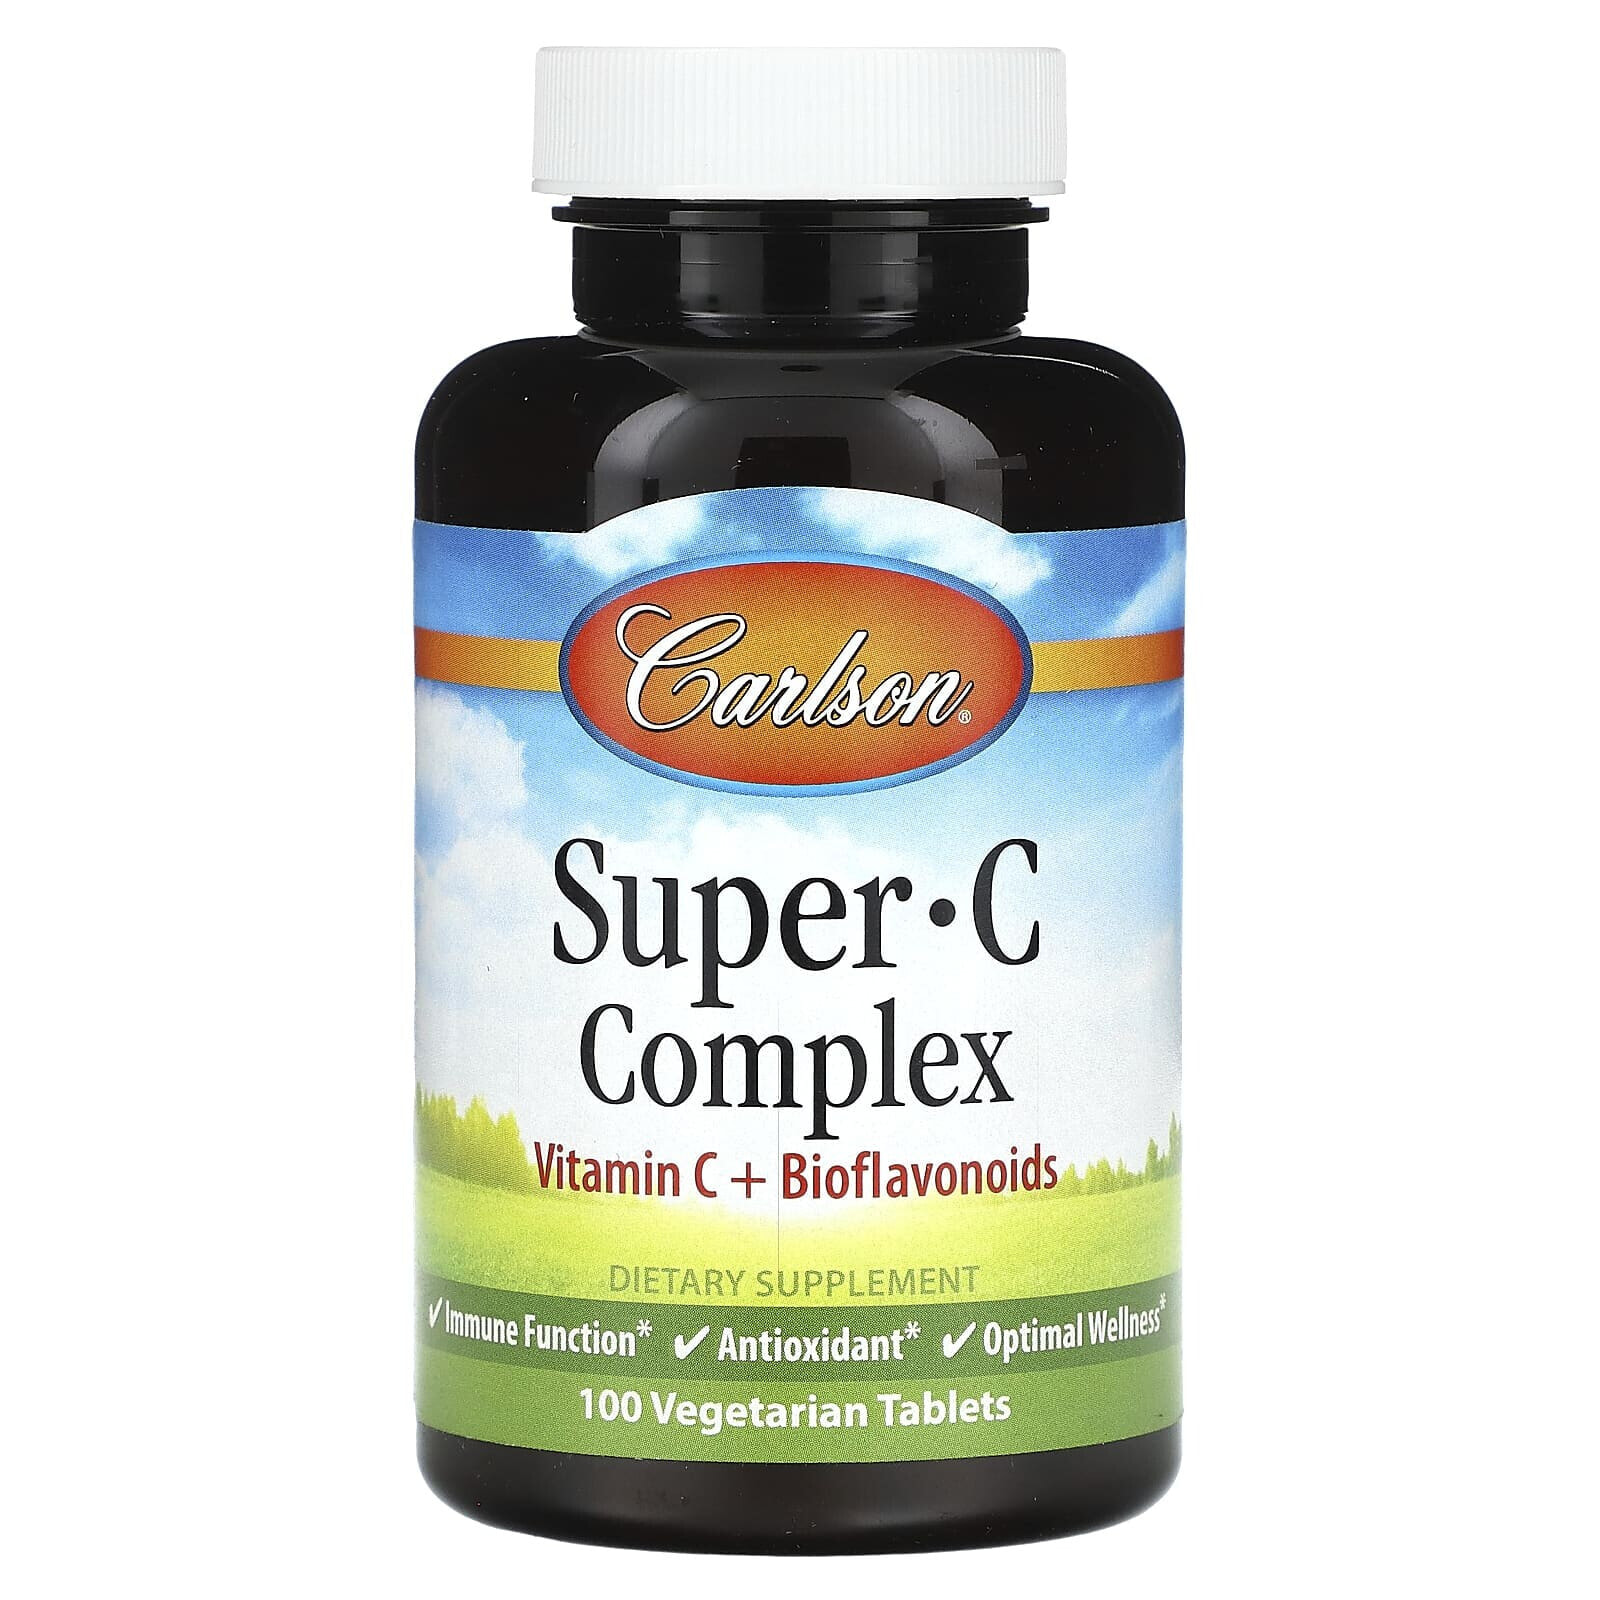 Carlson, Super C Complex, 250 вегетарианских таблеток